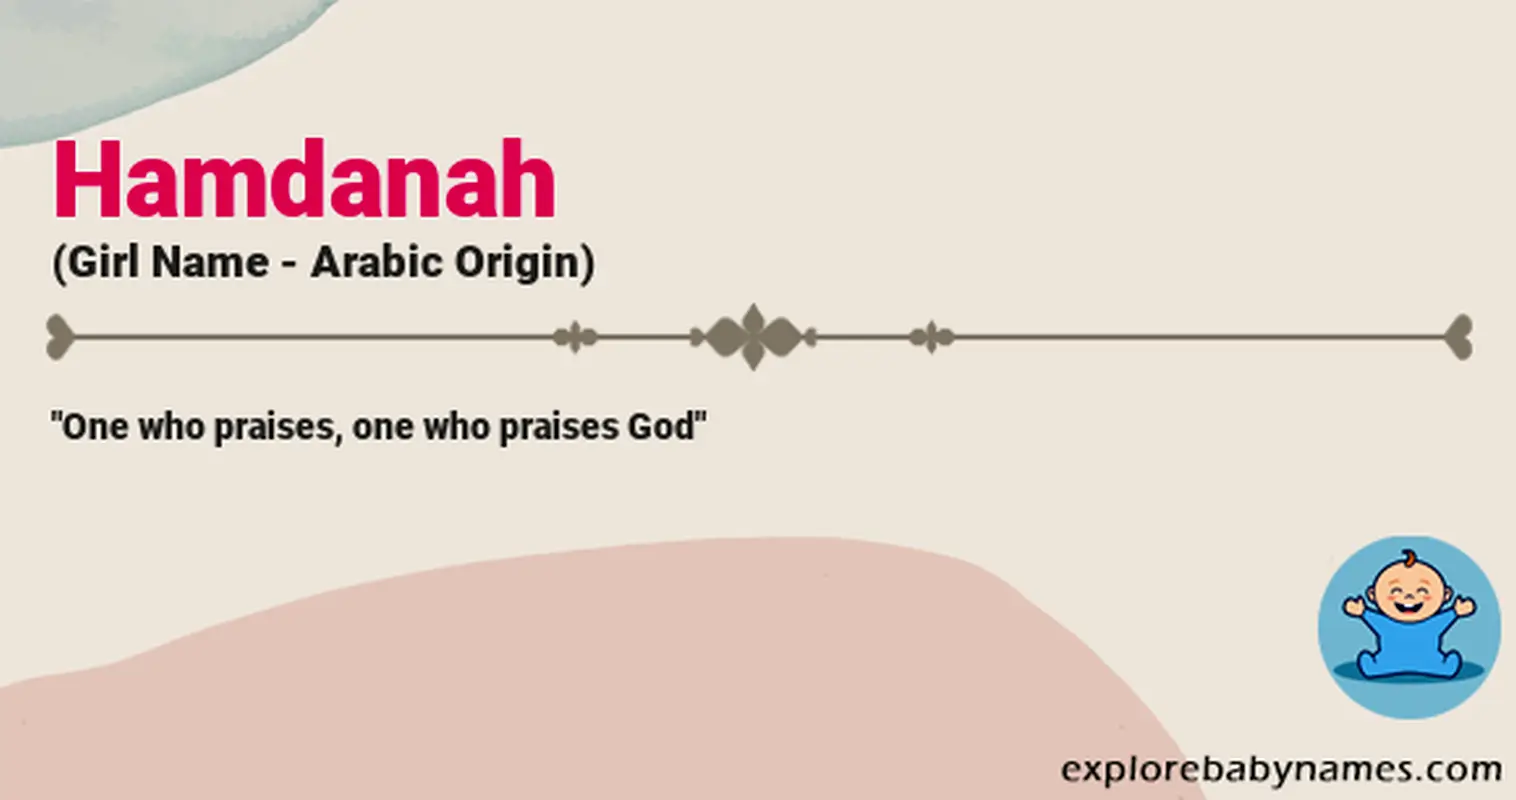 Meaning of Hamdanah